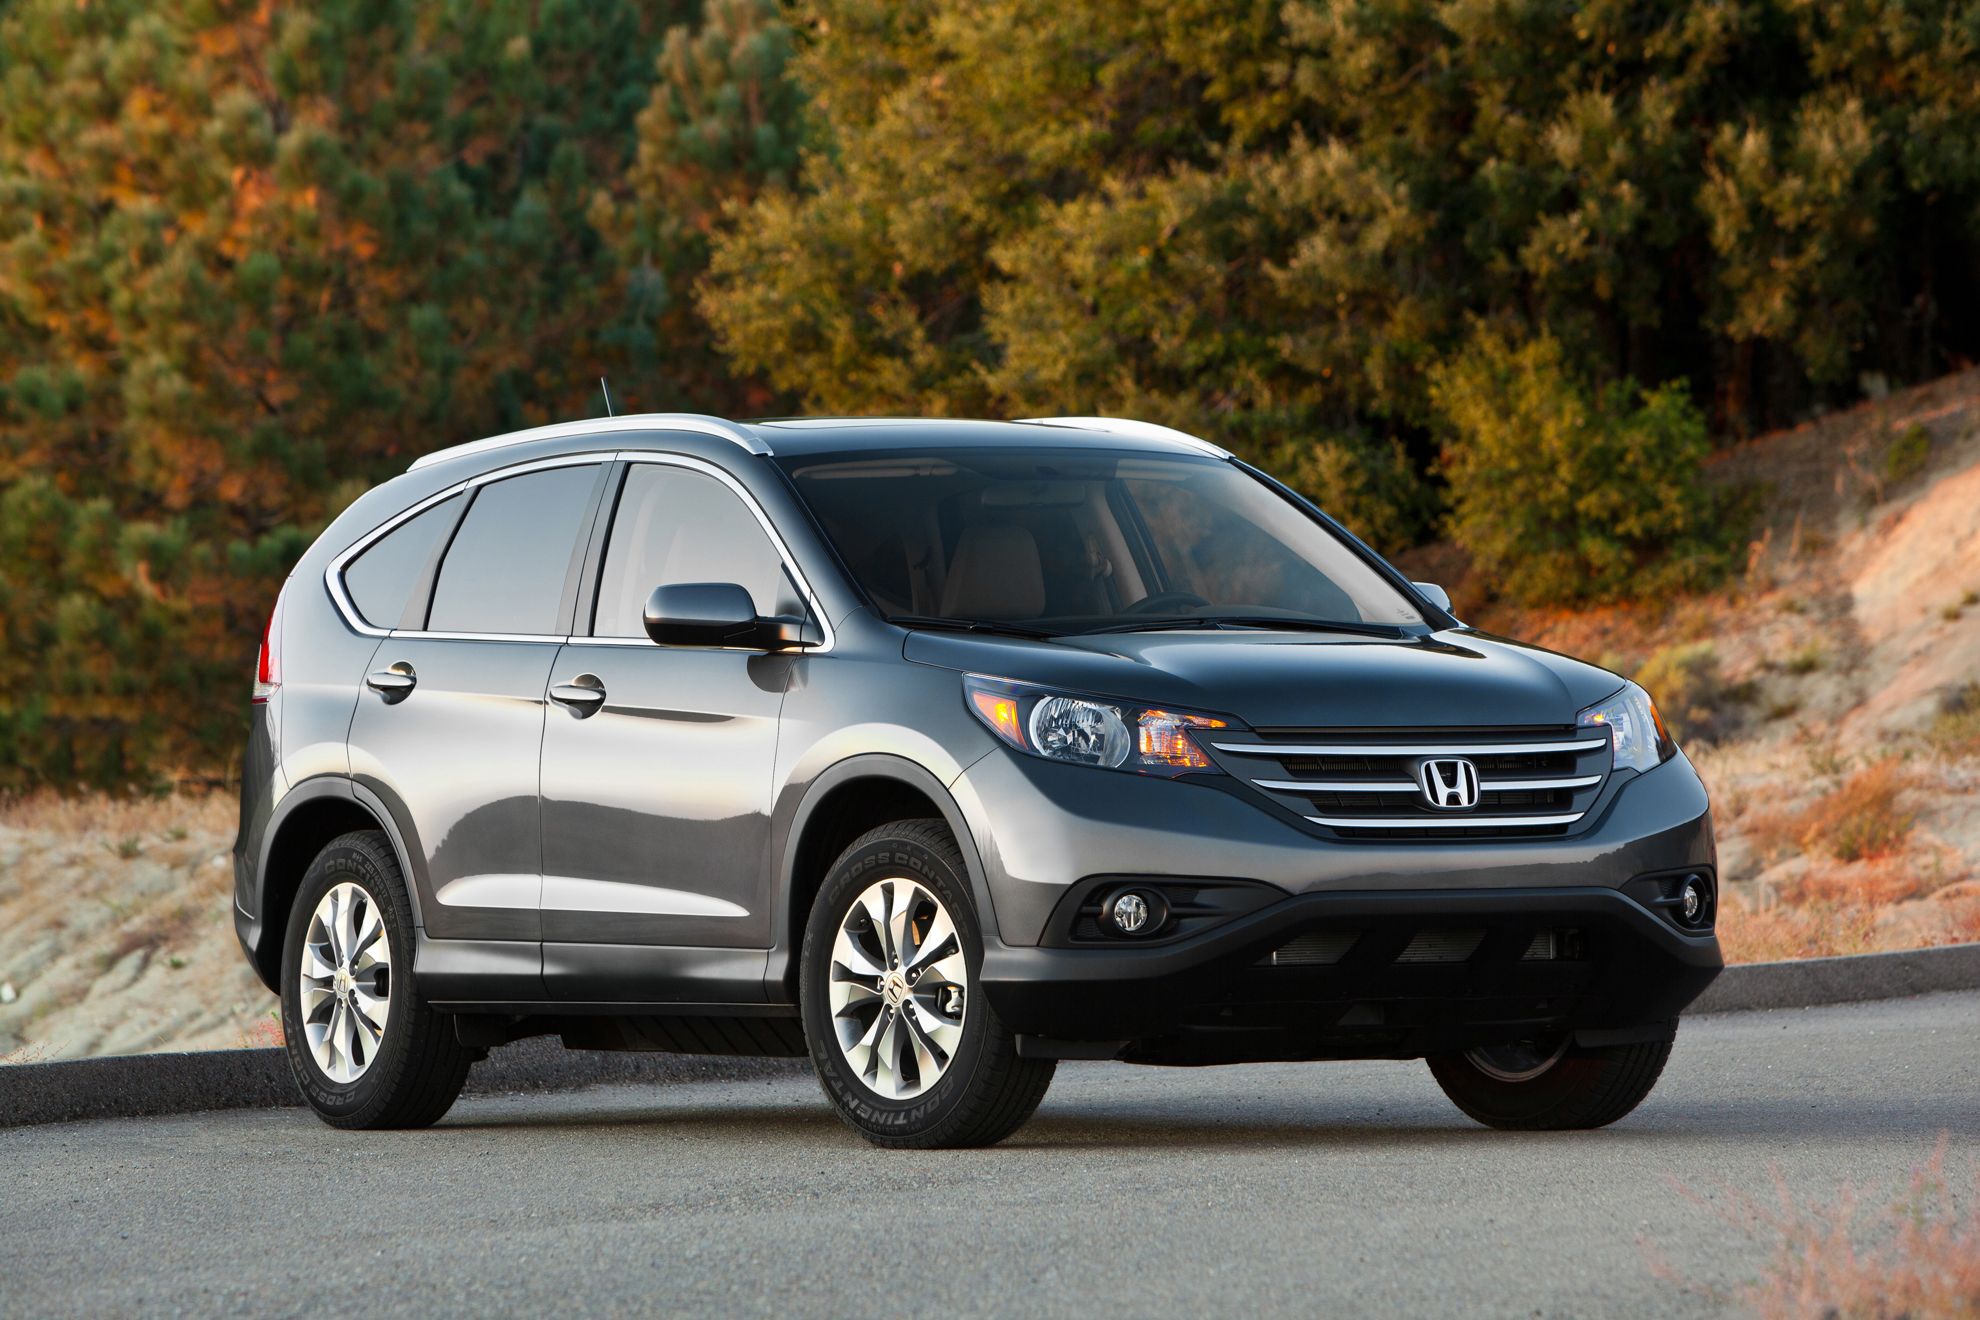 Honda Accord and Honda CRV – Tops According to IHS Automotive